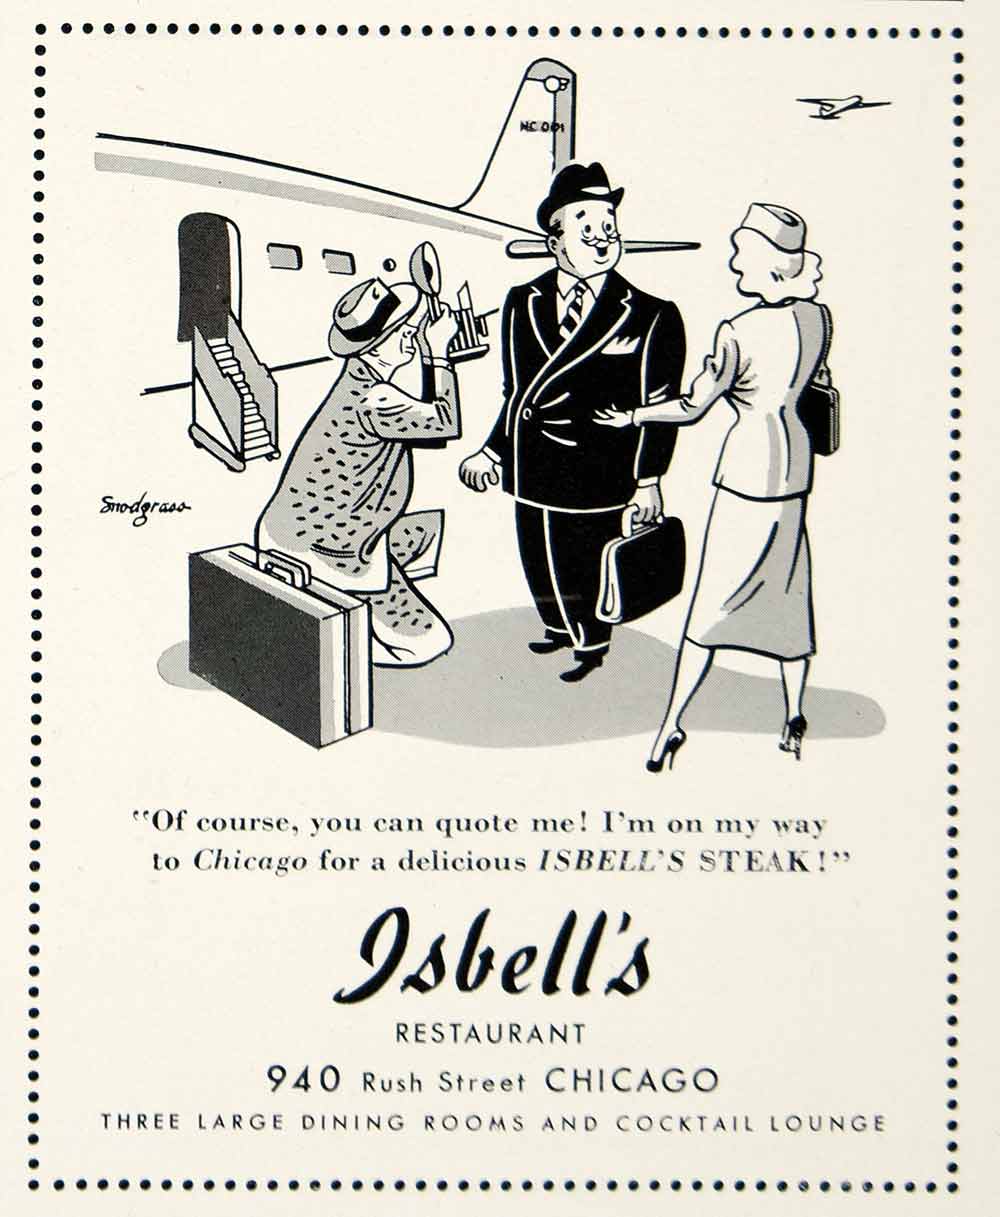 1950 Ad Isbells Restaurant Chicago IL Snodgrass Art Airplane Airport Dining YFT6